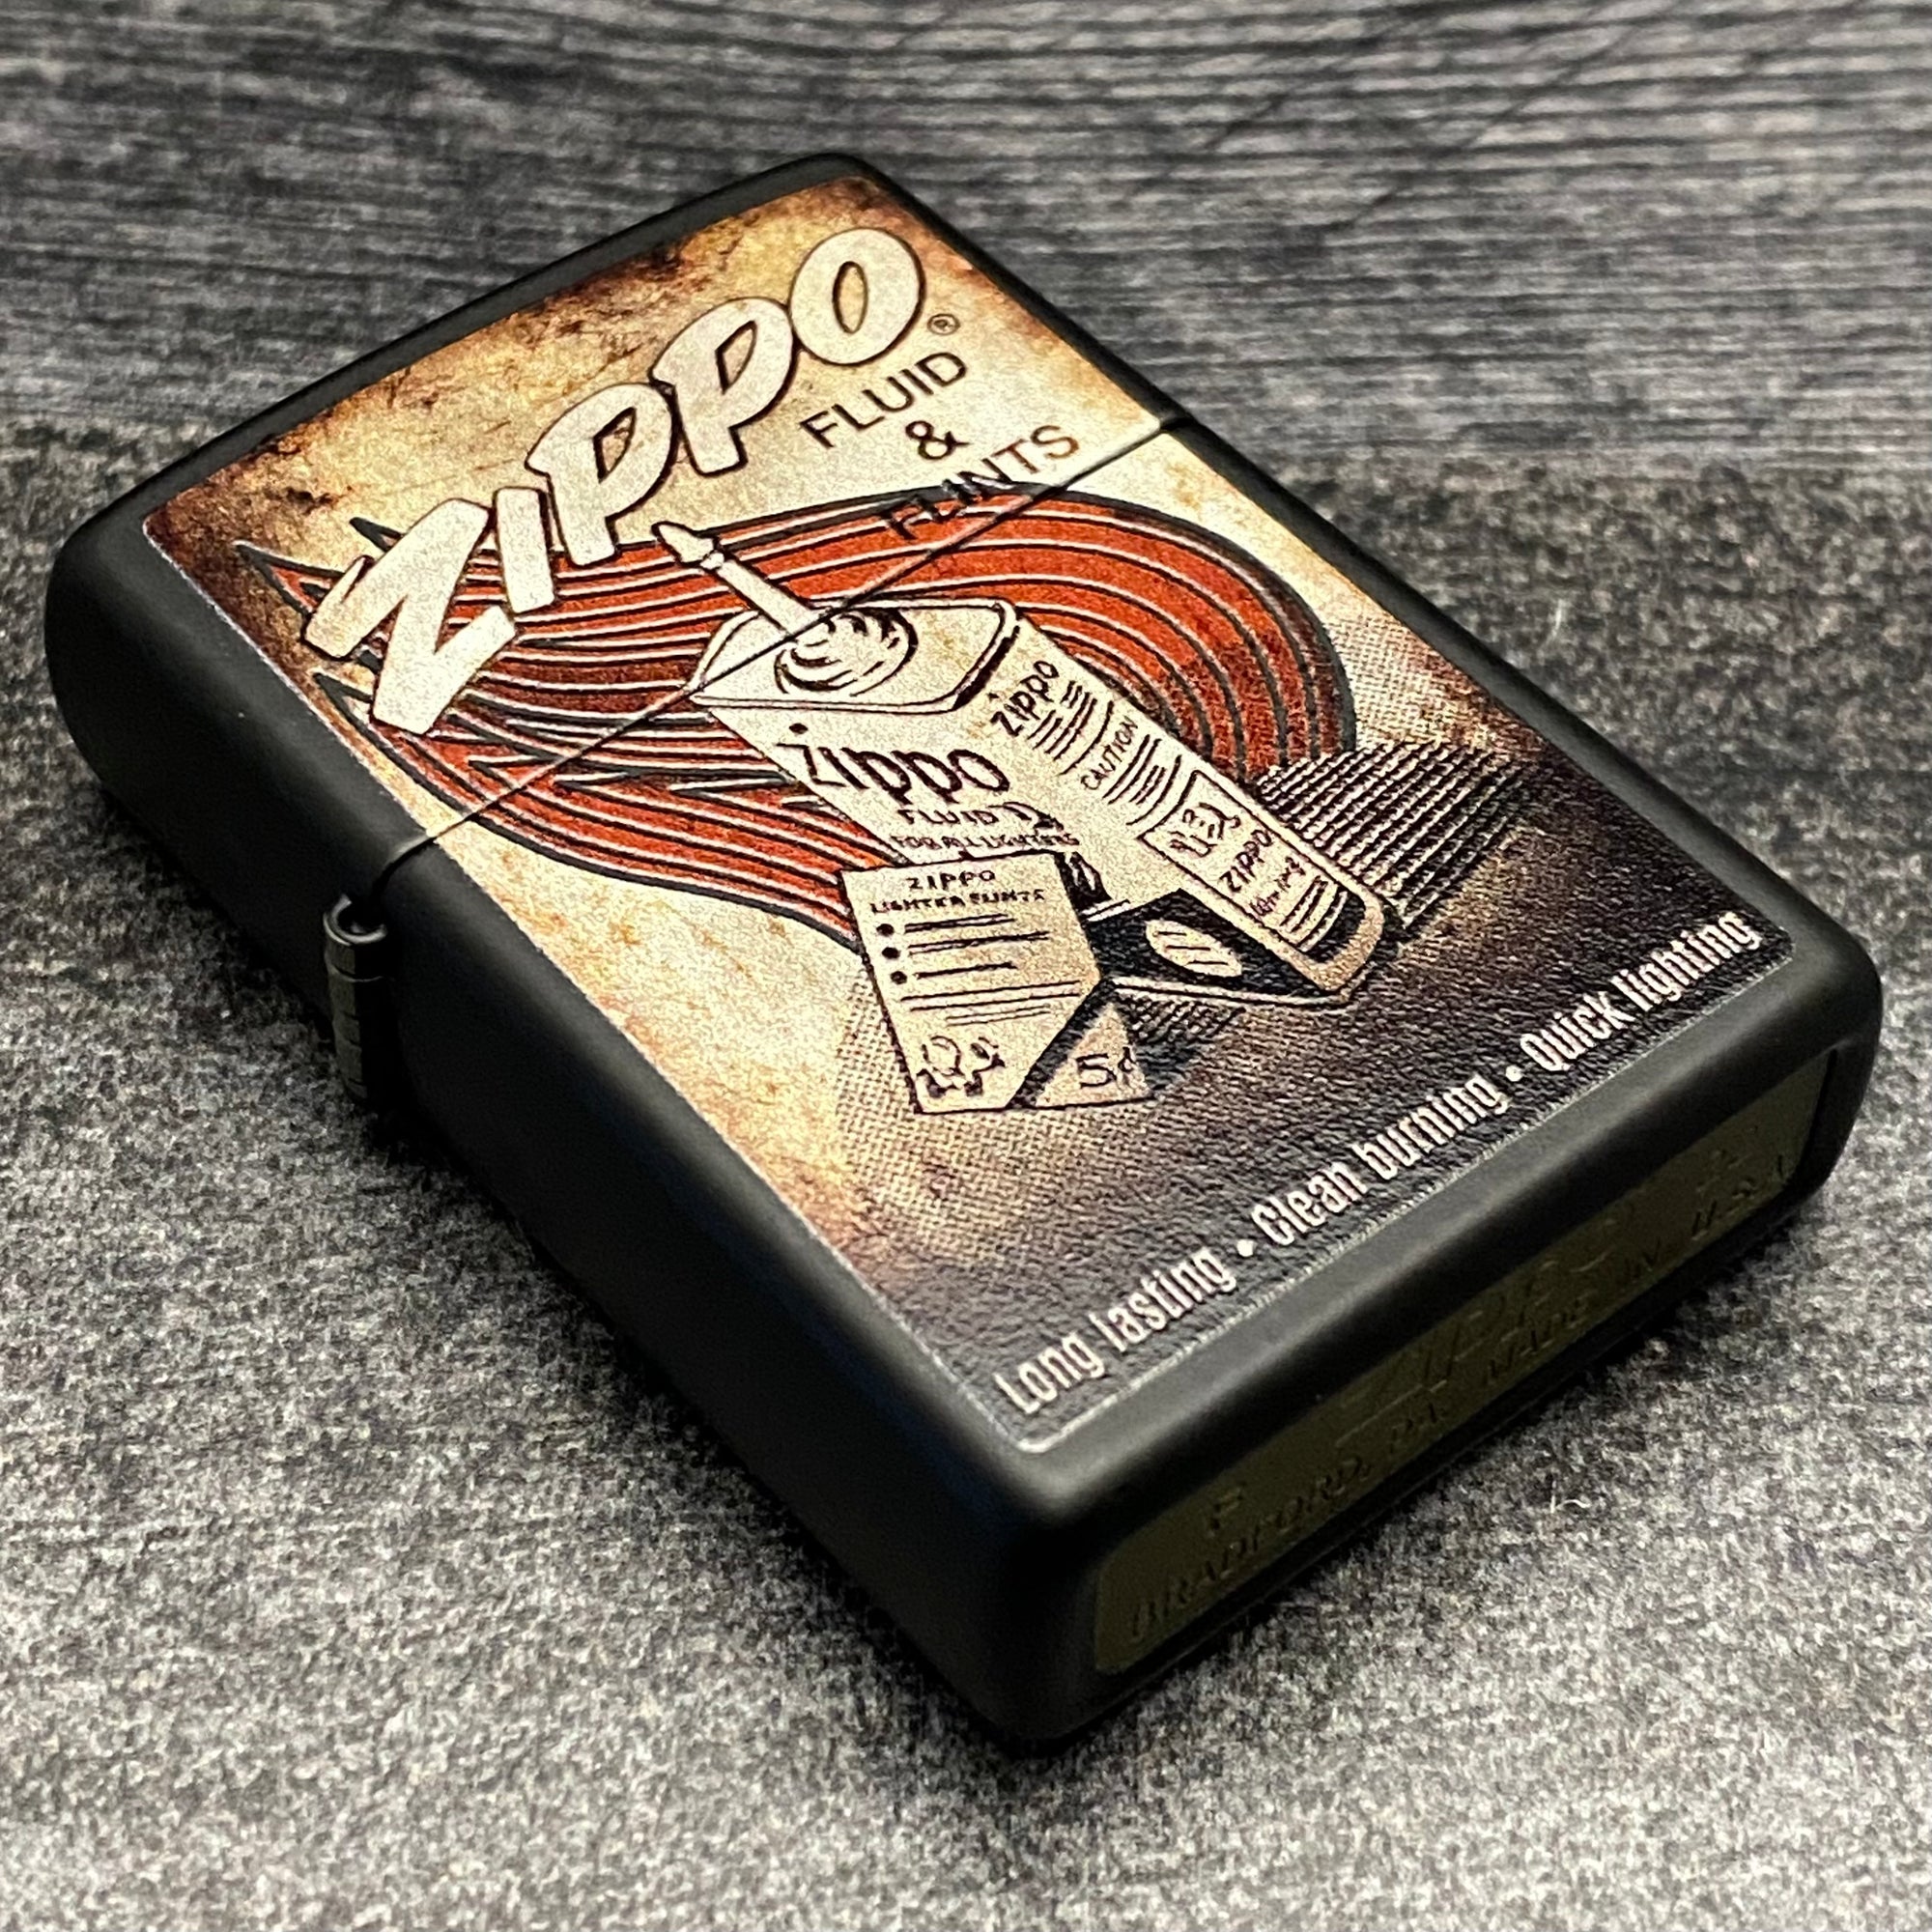 Zippo Lighter - Vintage Fluid & Flints - Black Matte